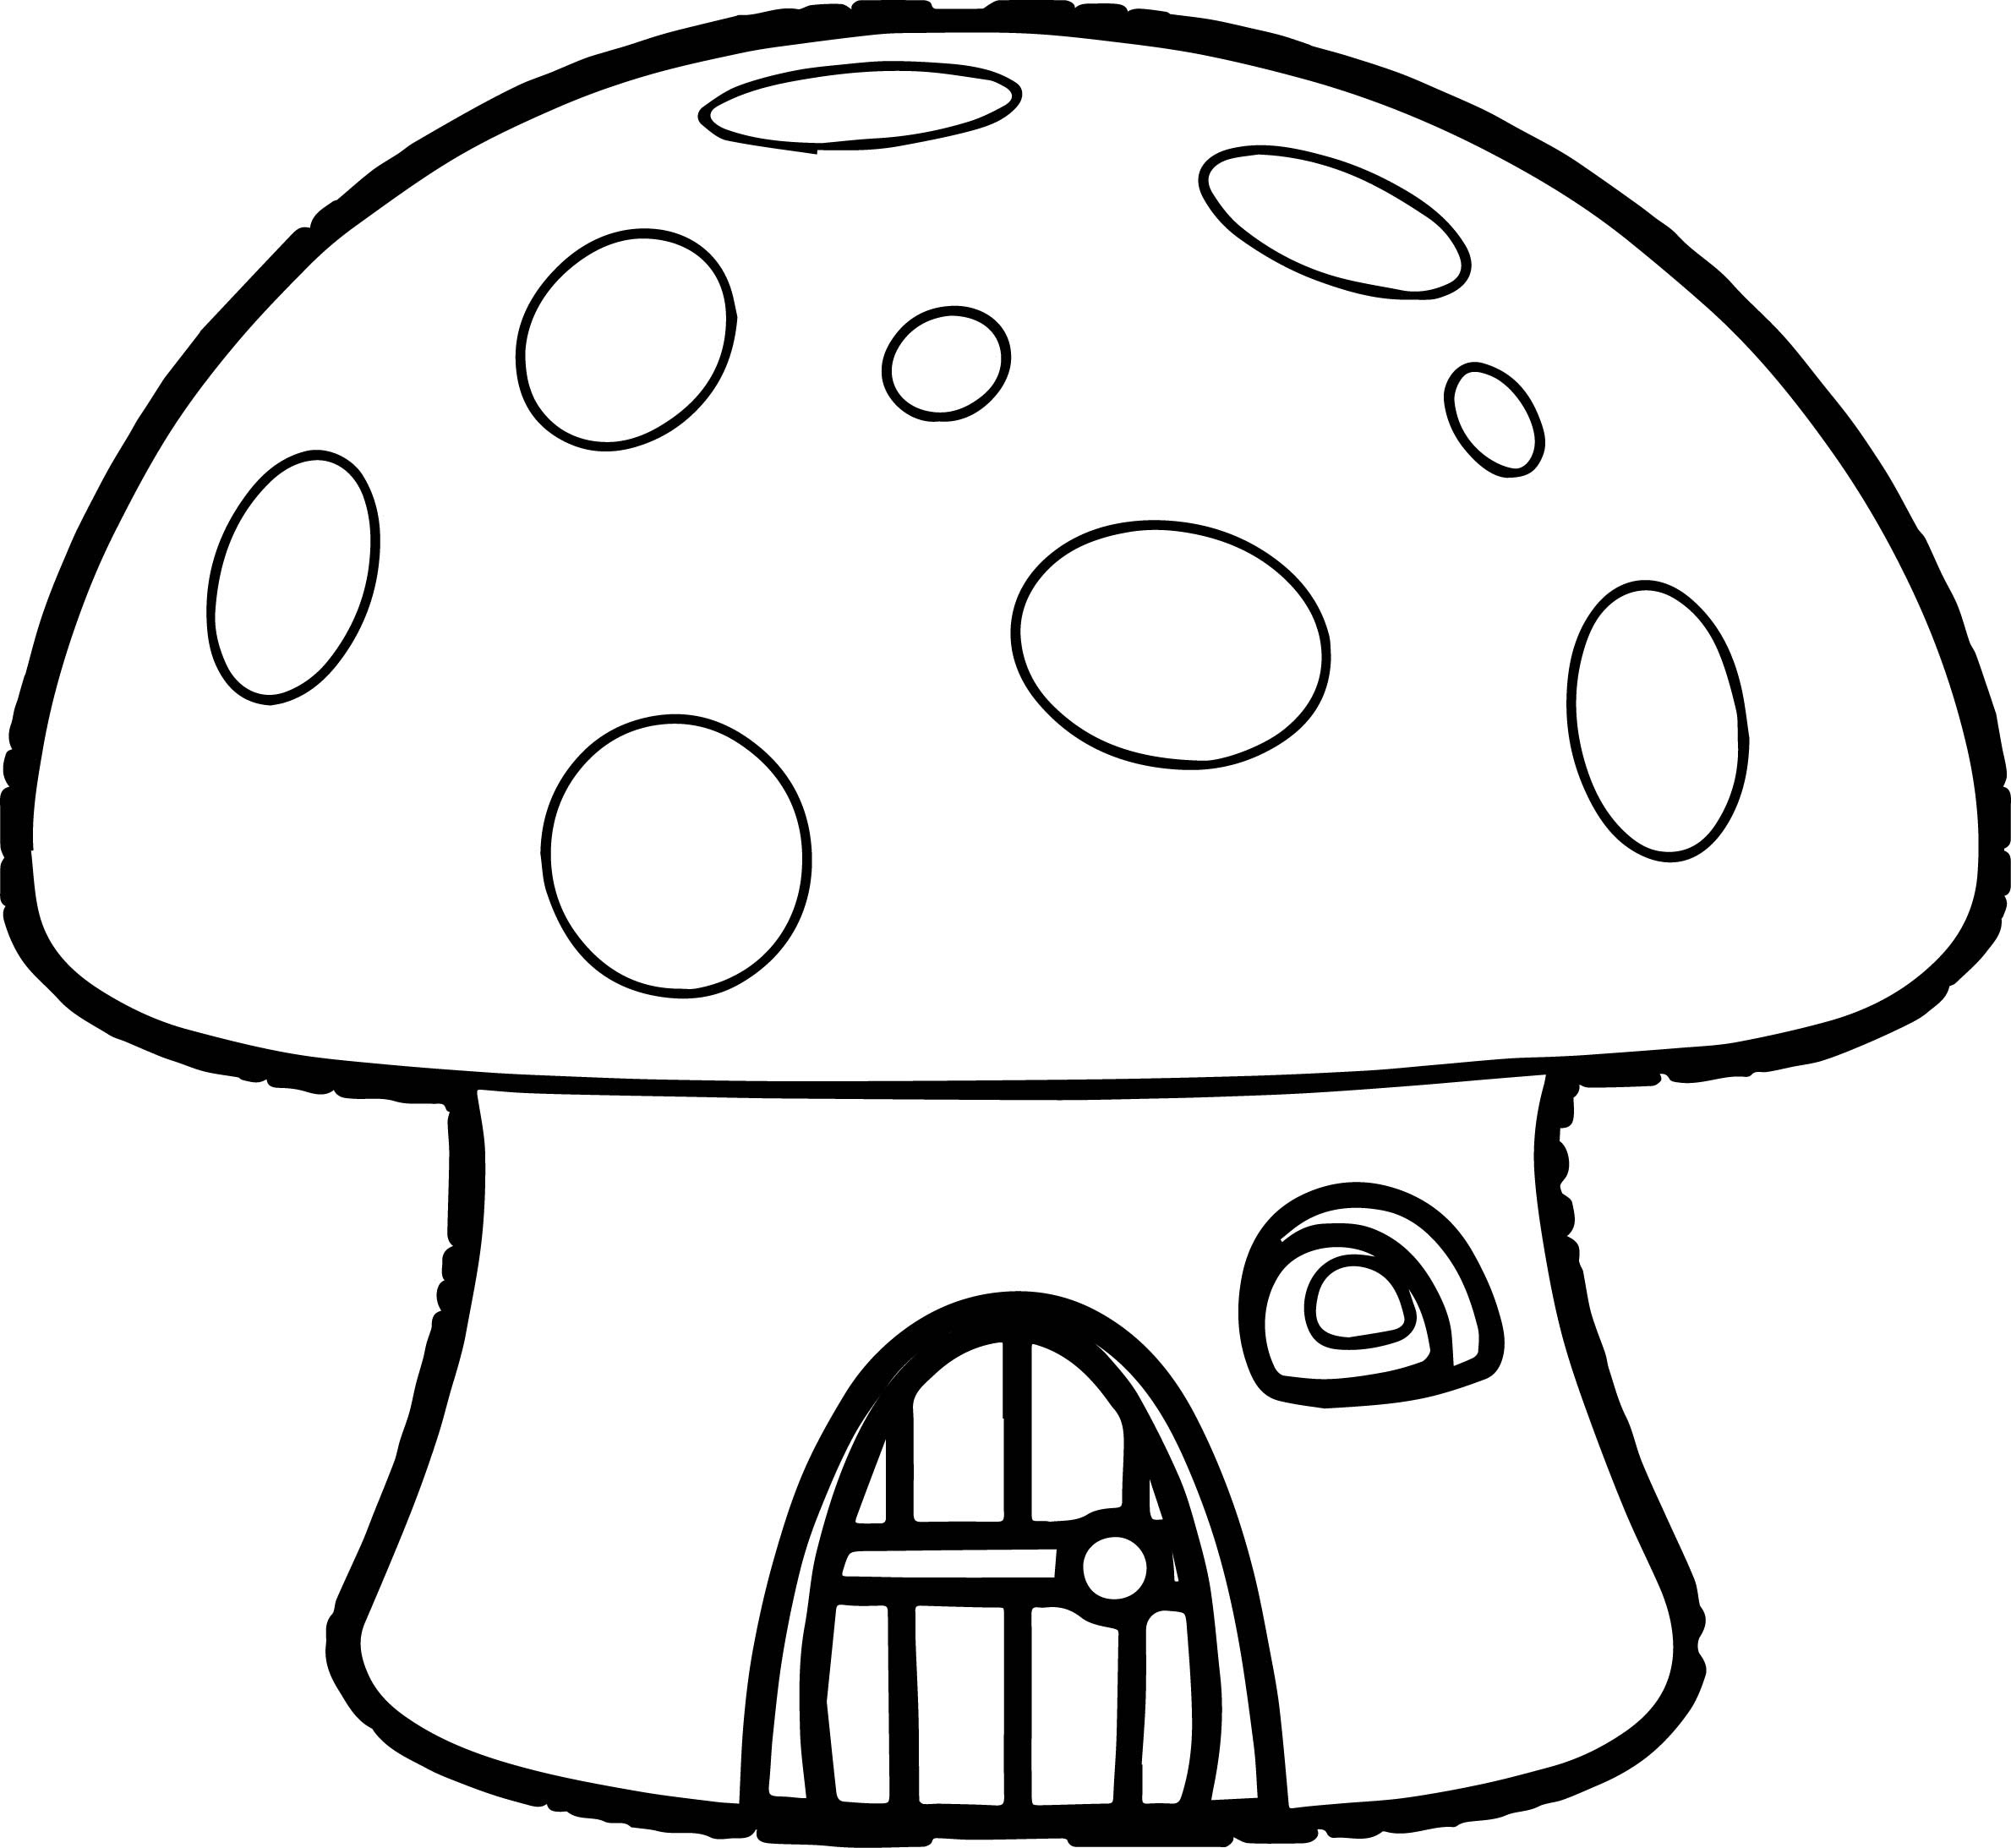 Orange Mushroom House Smurf Coloring Page  Wecoloringpage.com